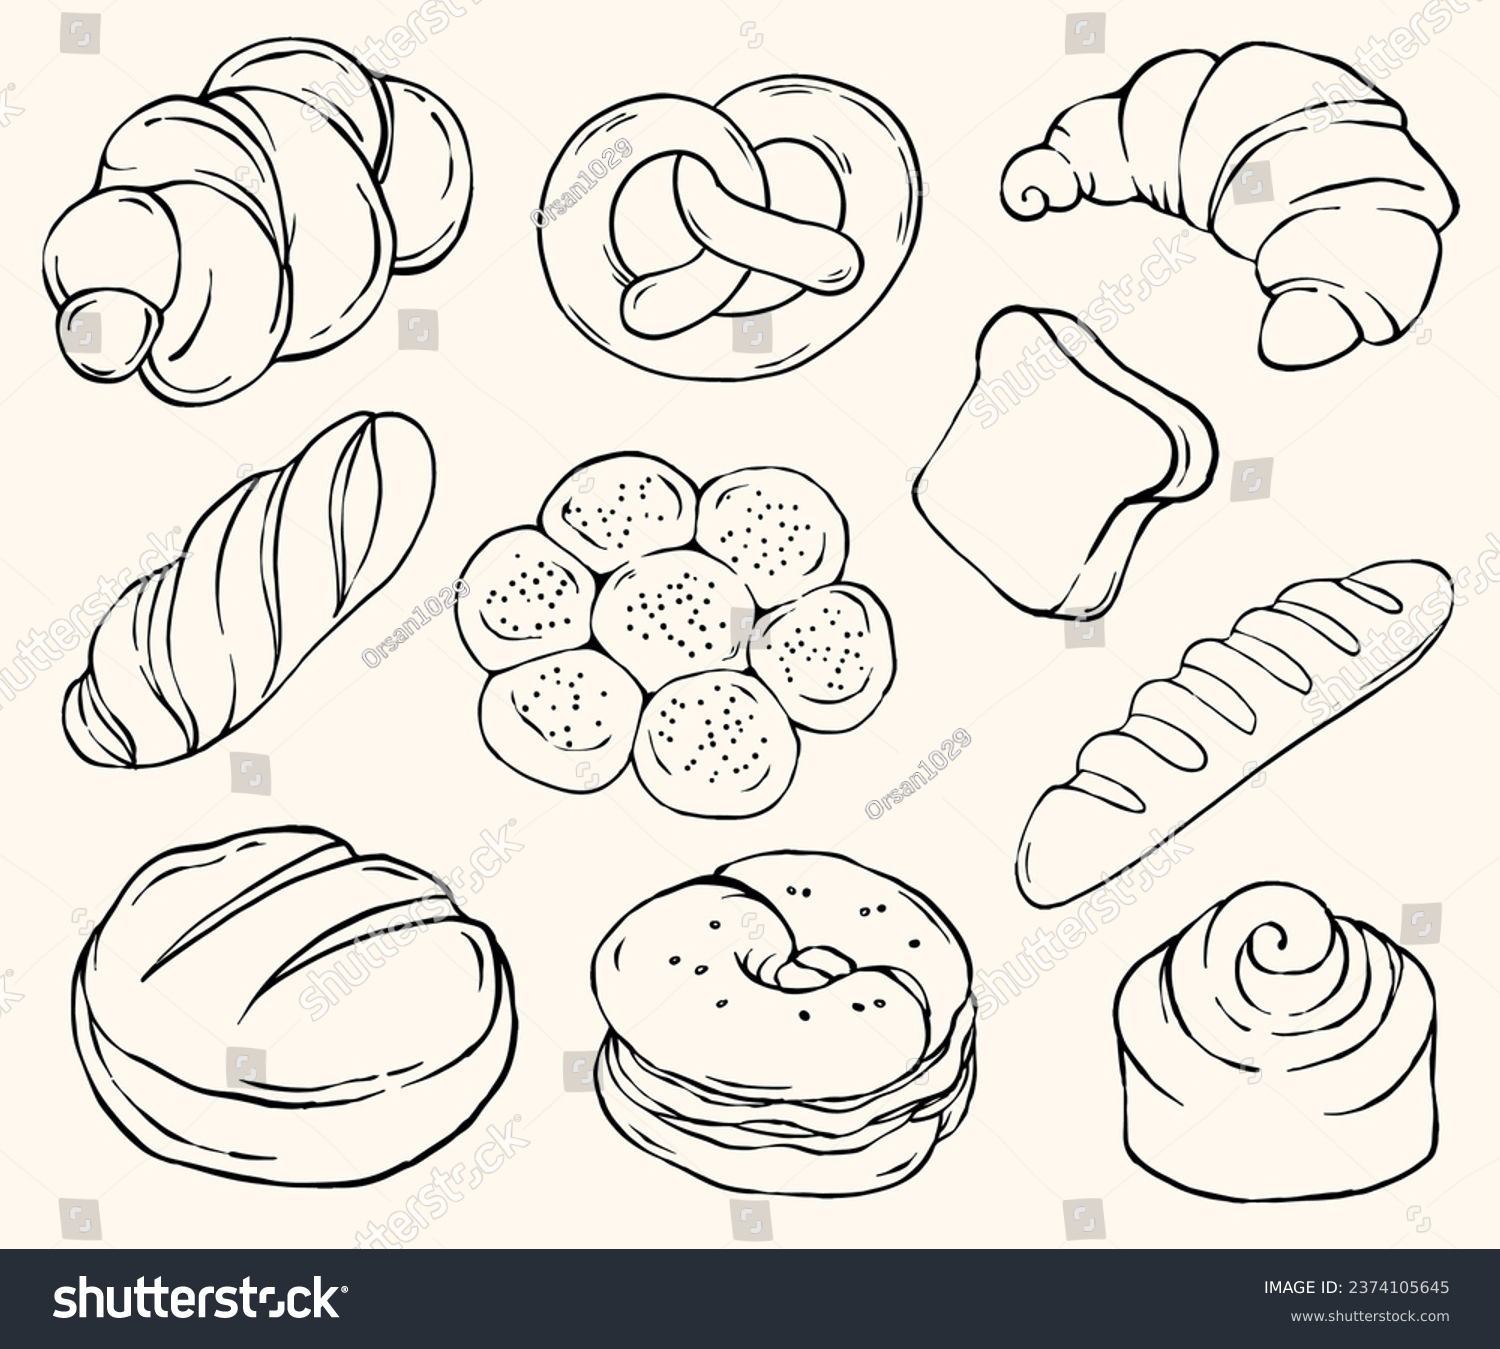 Baked Bread Hand-drawn Illustration Set: French Bread, Bagel, German Pretzel, Cinnamon Roll, Challah Bread, Country Loaf, Japanese Milk Toast, Croissant, Vienna Bread, Artisan Loaves #2374105645